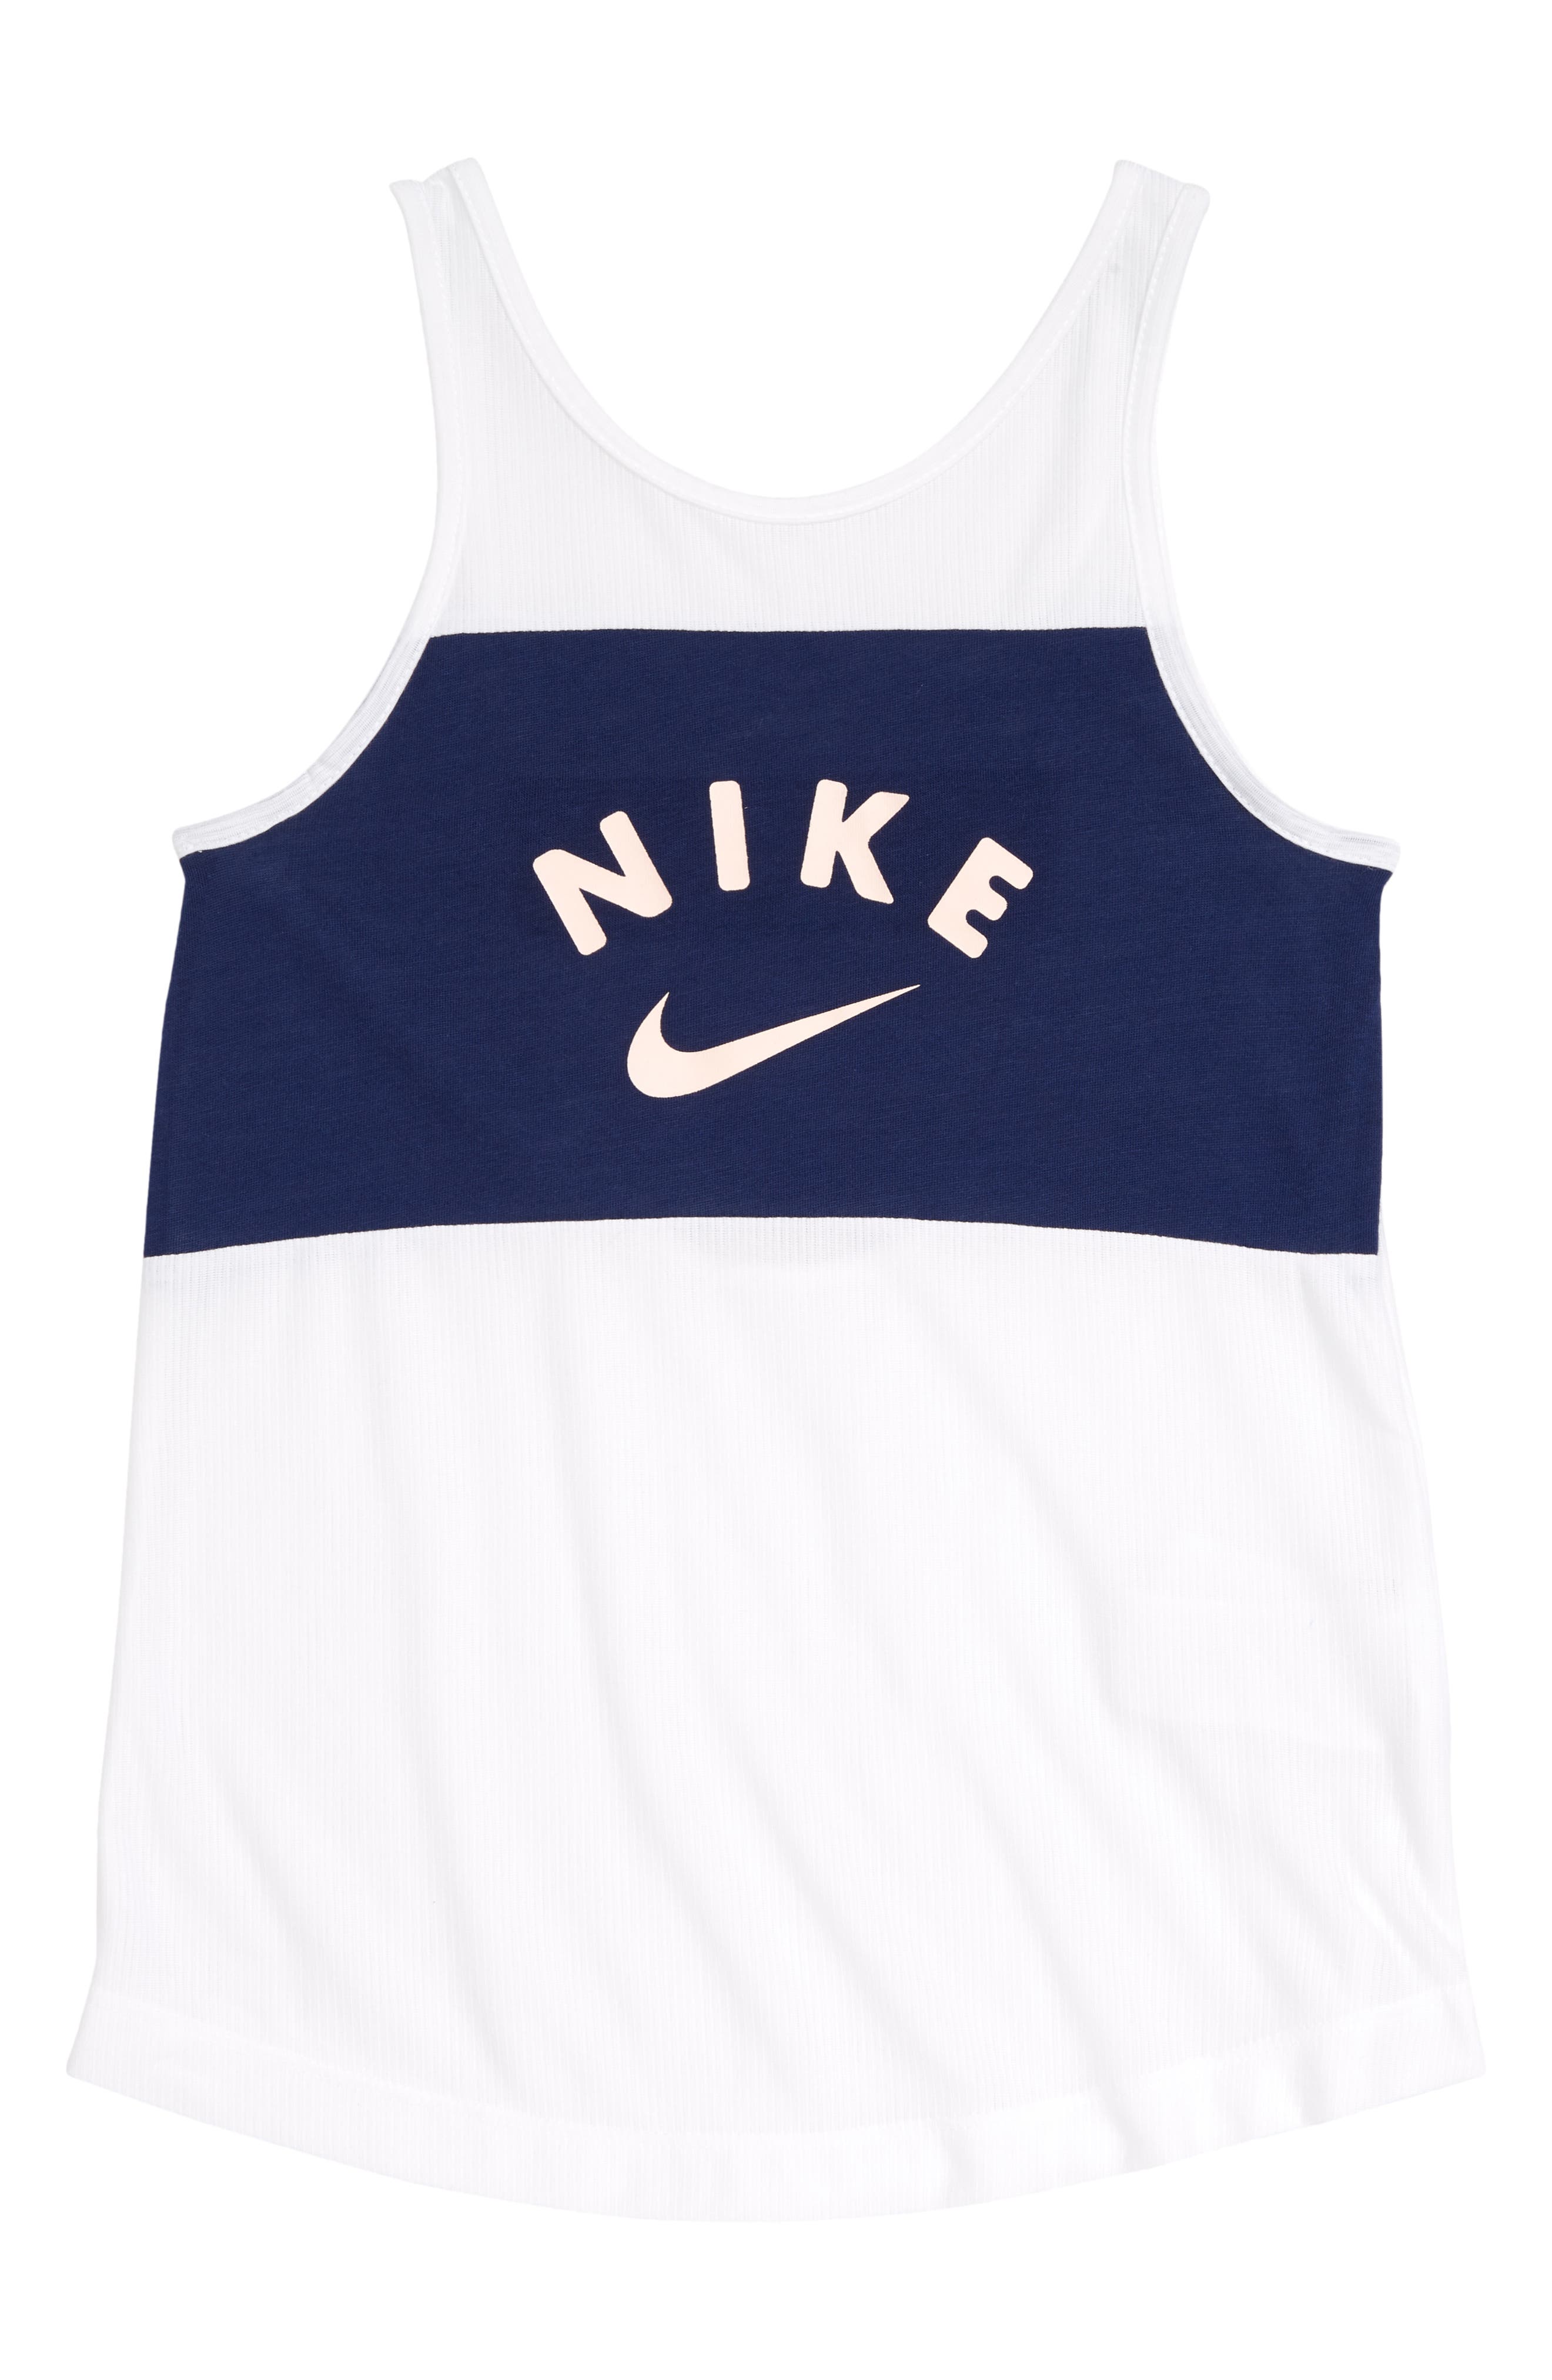 Big Girls' Nike Tops: Stripe, T-shirts 